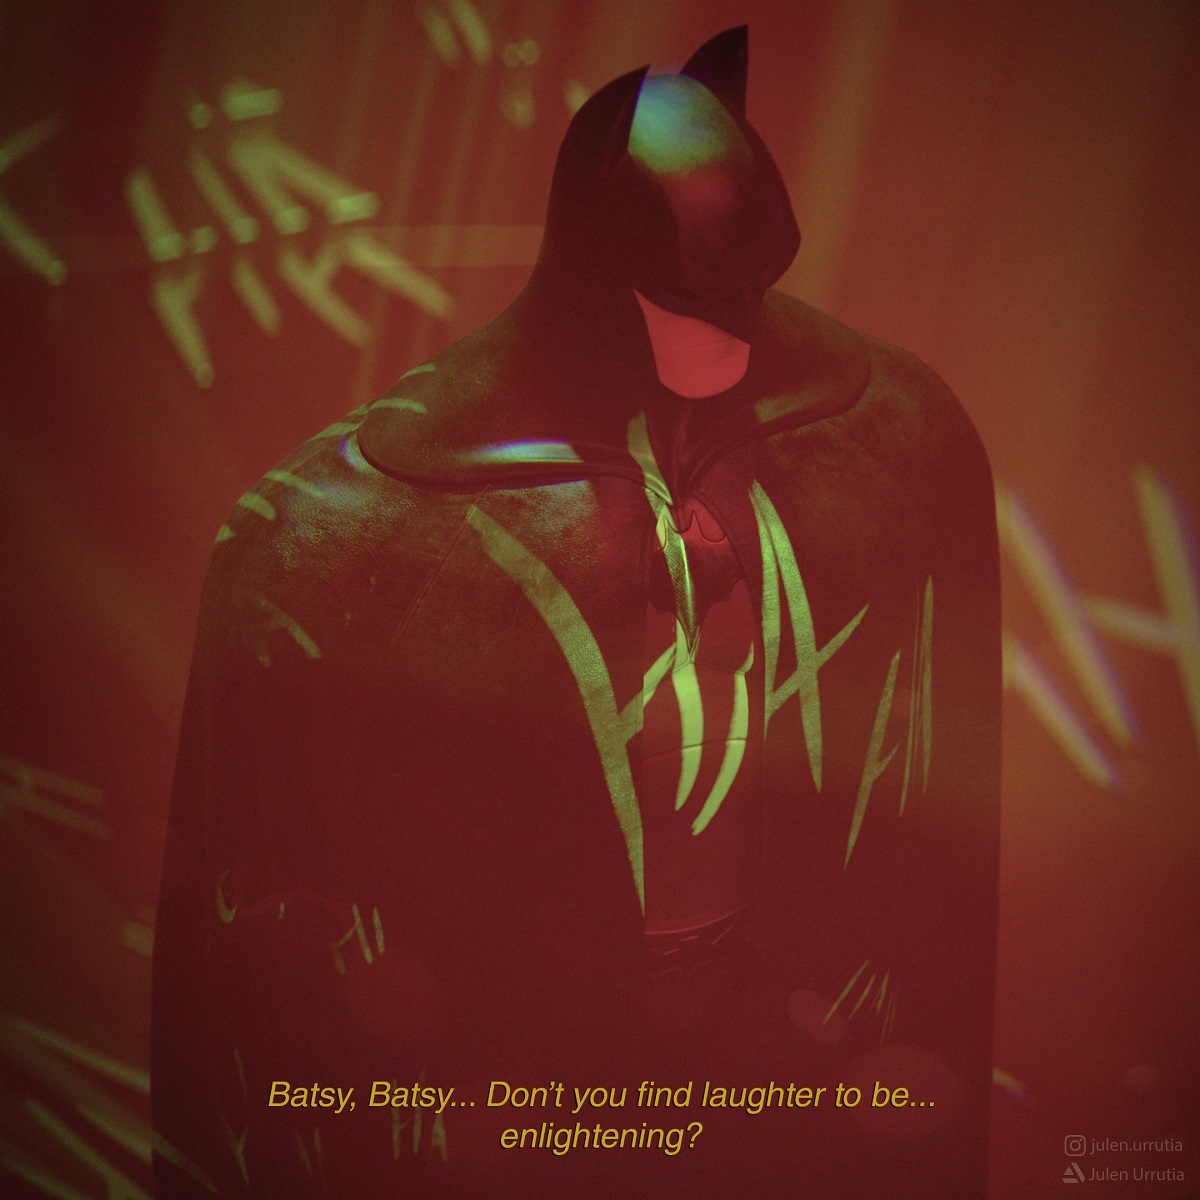 Julen Urrutia artista digital reimagina Batman atraves de computacao grafica 19